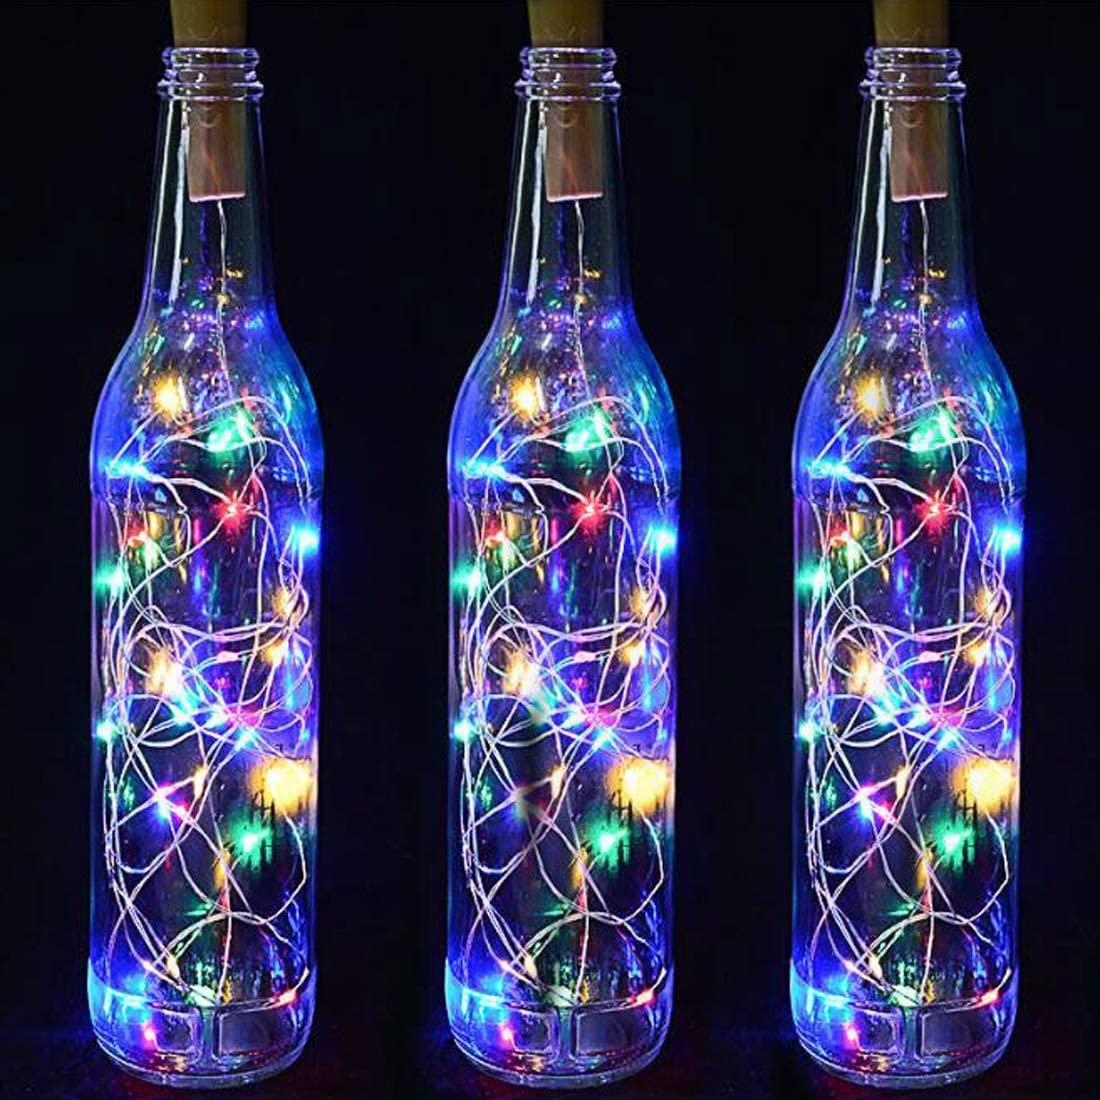 Laighter 9 Packs 20 LEDs Wine Bottle Cork Lights, 6.5ft Cork Lights Battery Operated Fairy String Lights for Liquor Bottles Crafts Party Wedding Halloween Christmas Decor, Multi-color